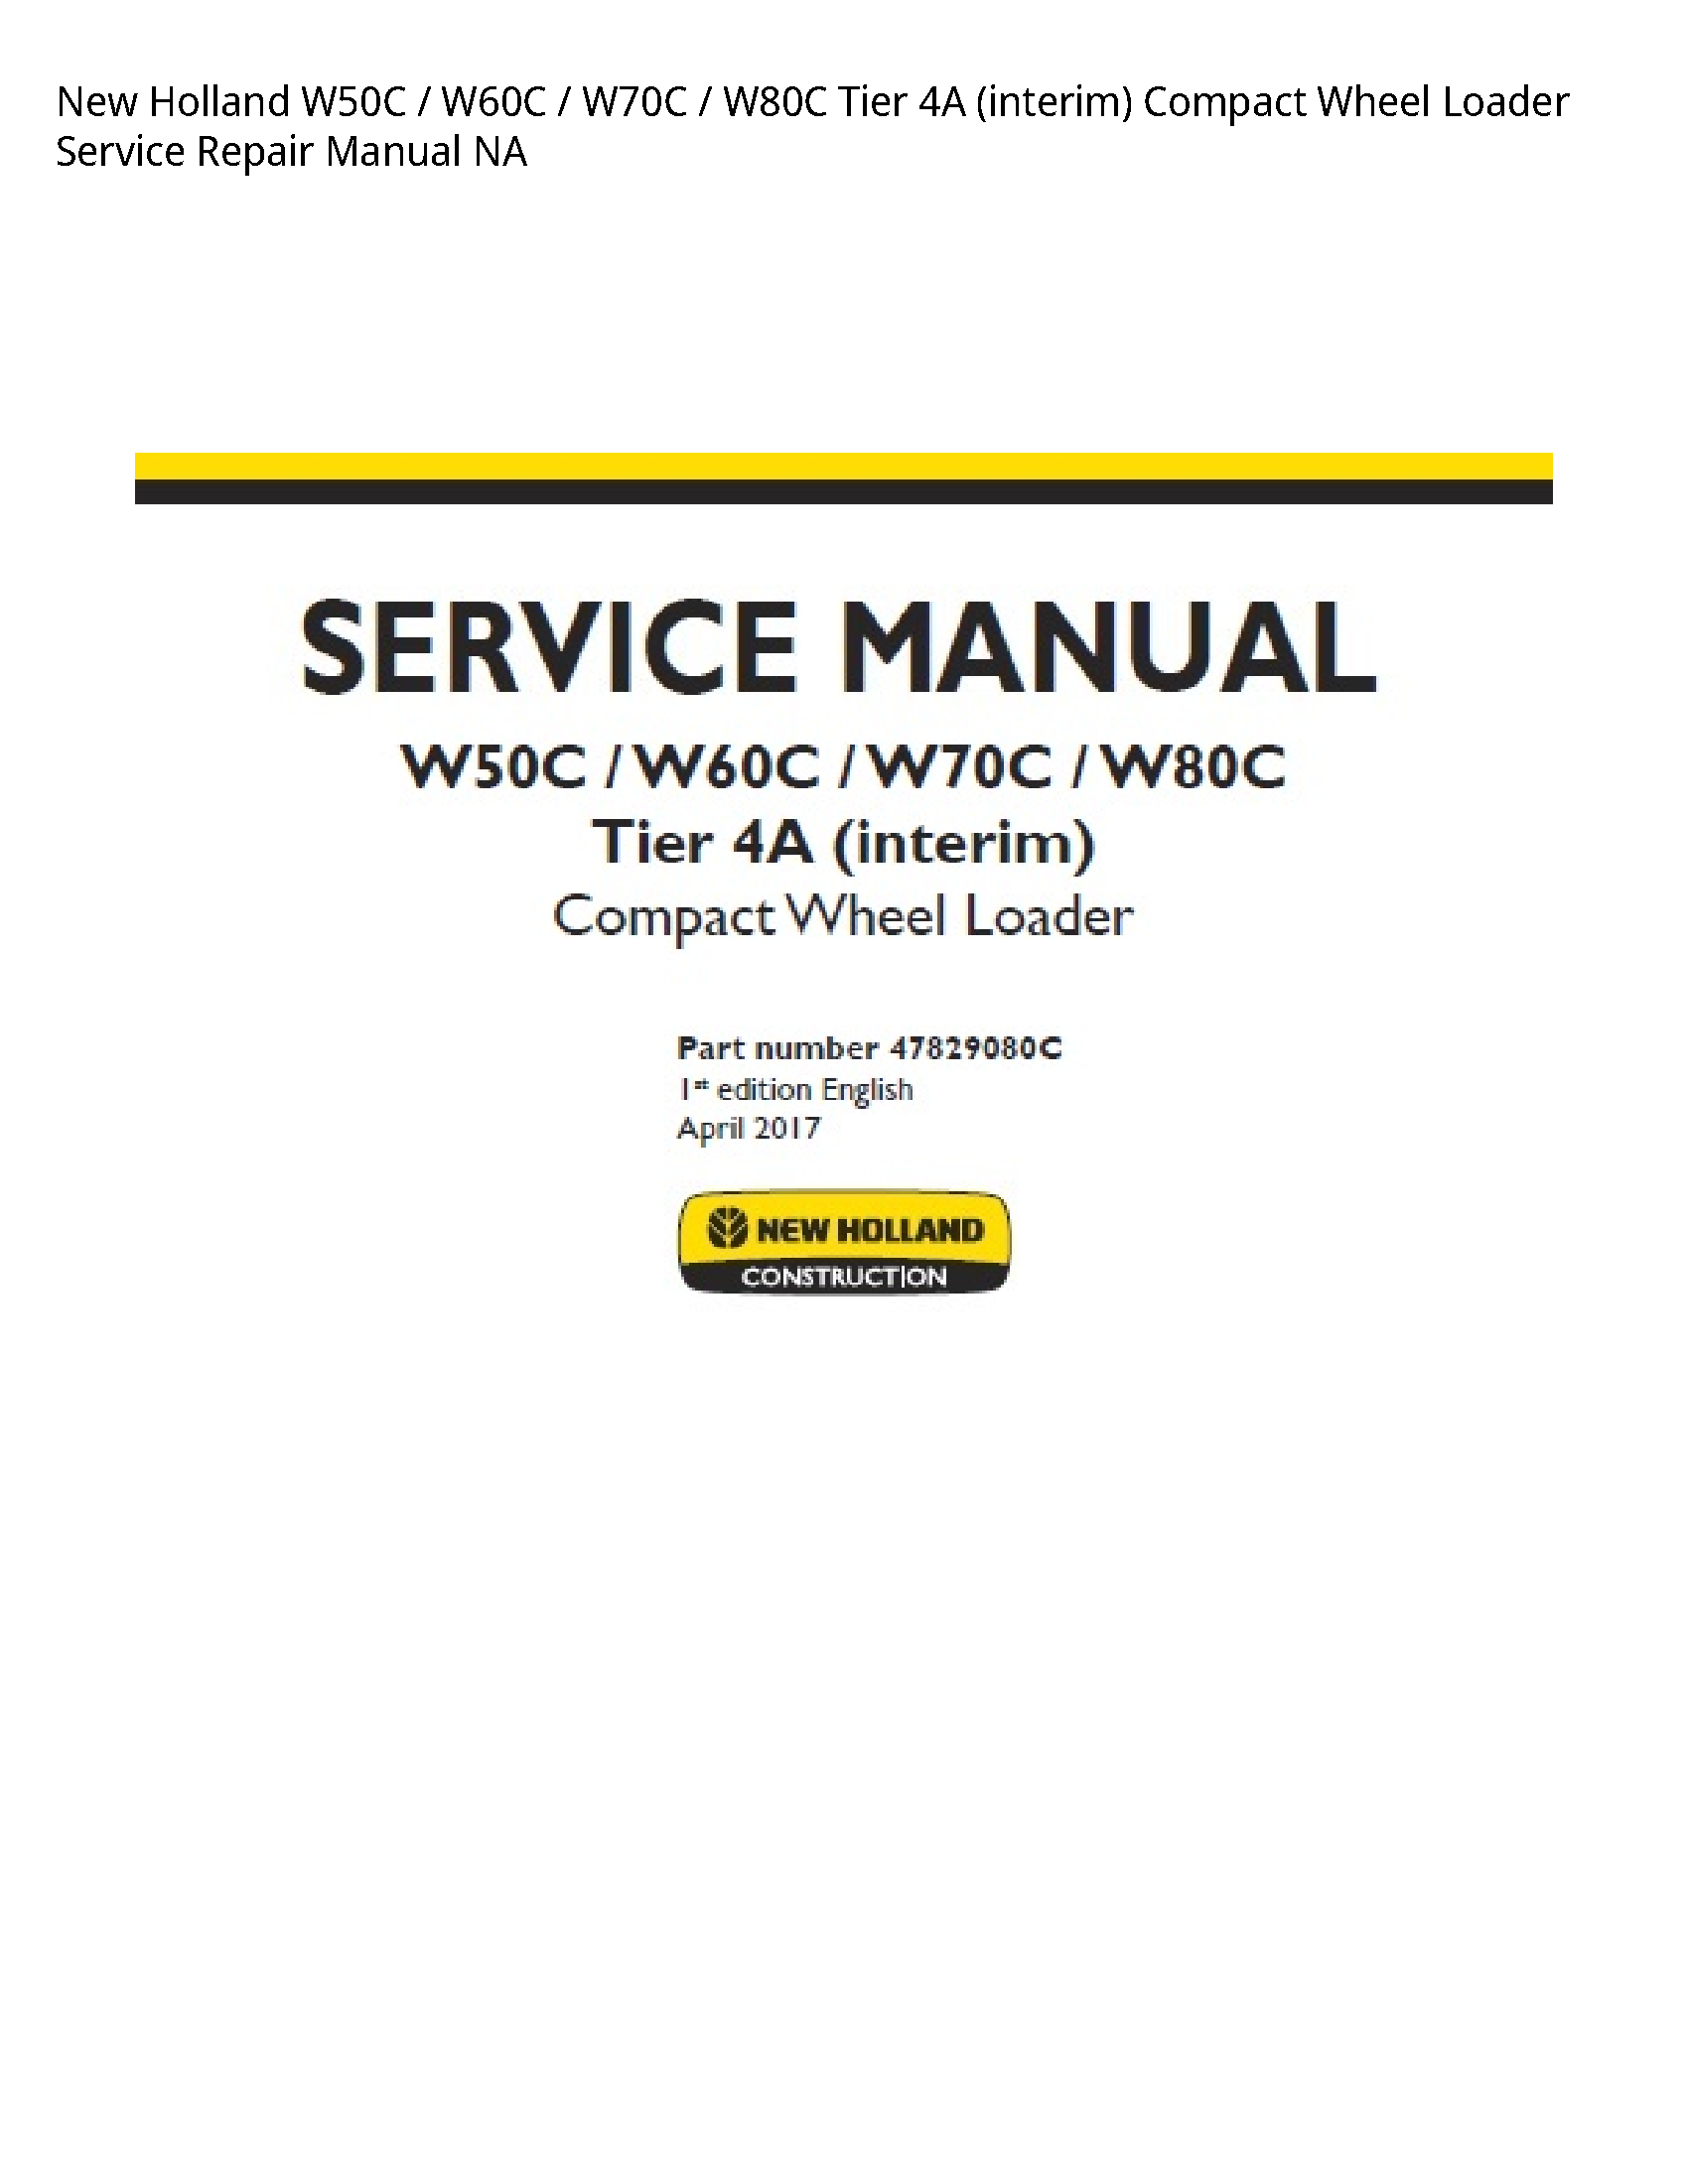 New Holland W50C Tier (interim) Compact Wheel Loader manual